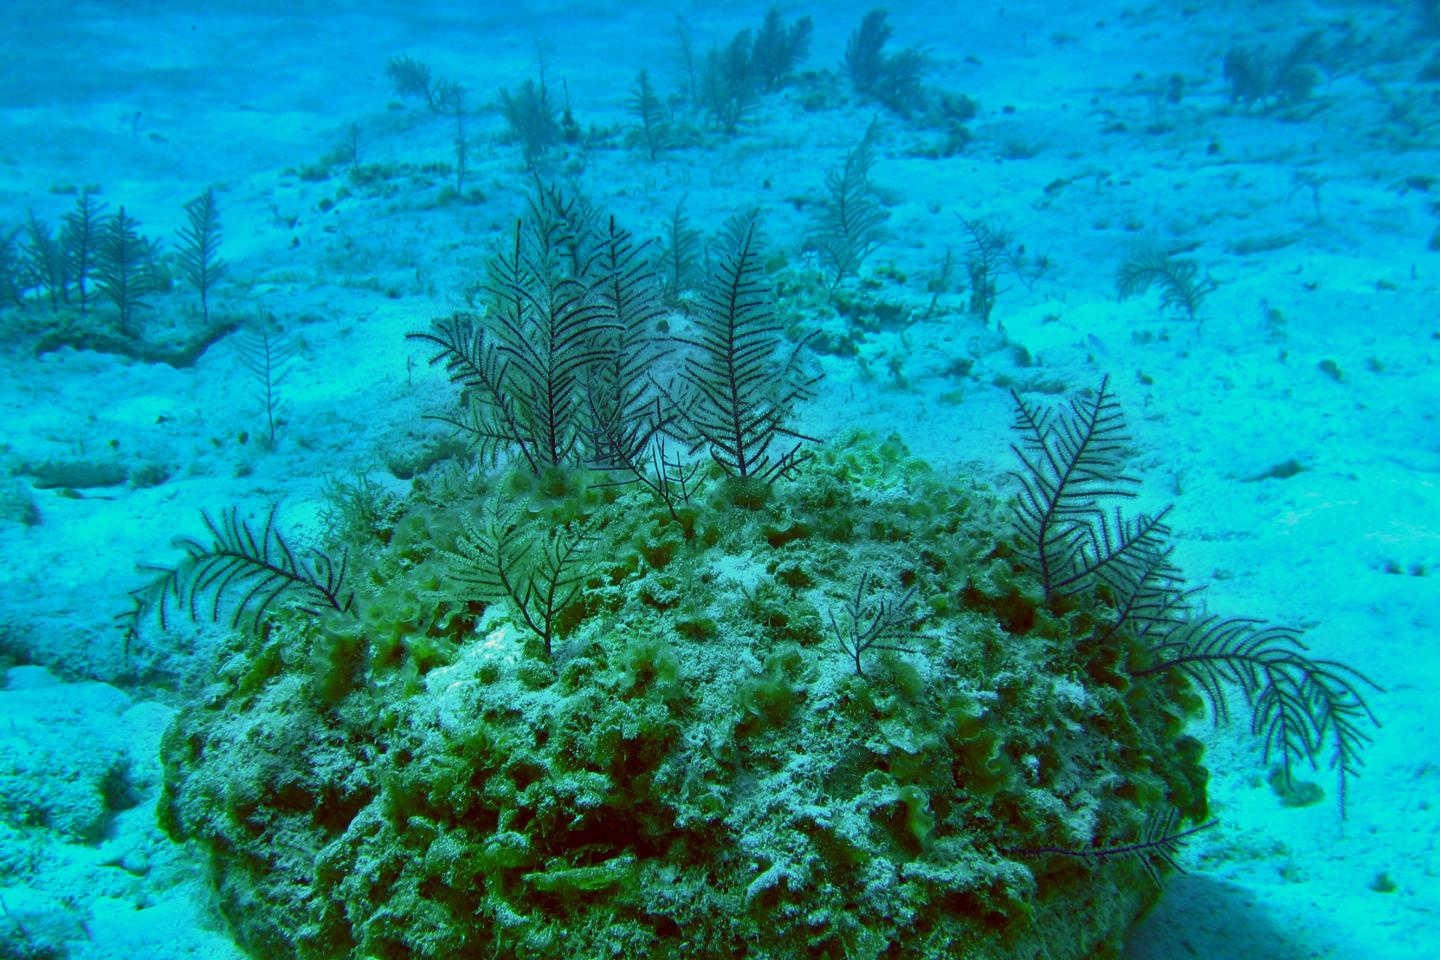 Horn corals of the species Antillogorgia elisabethae